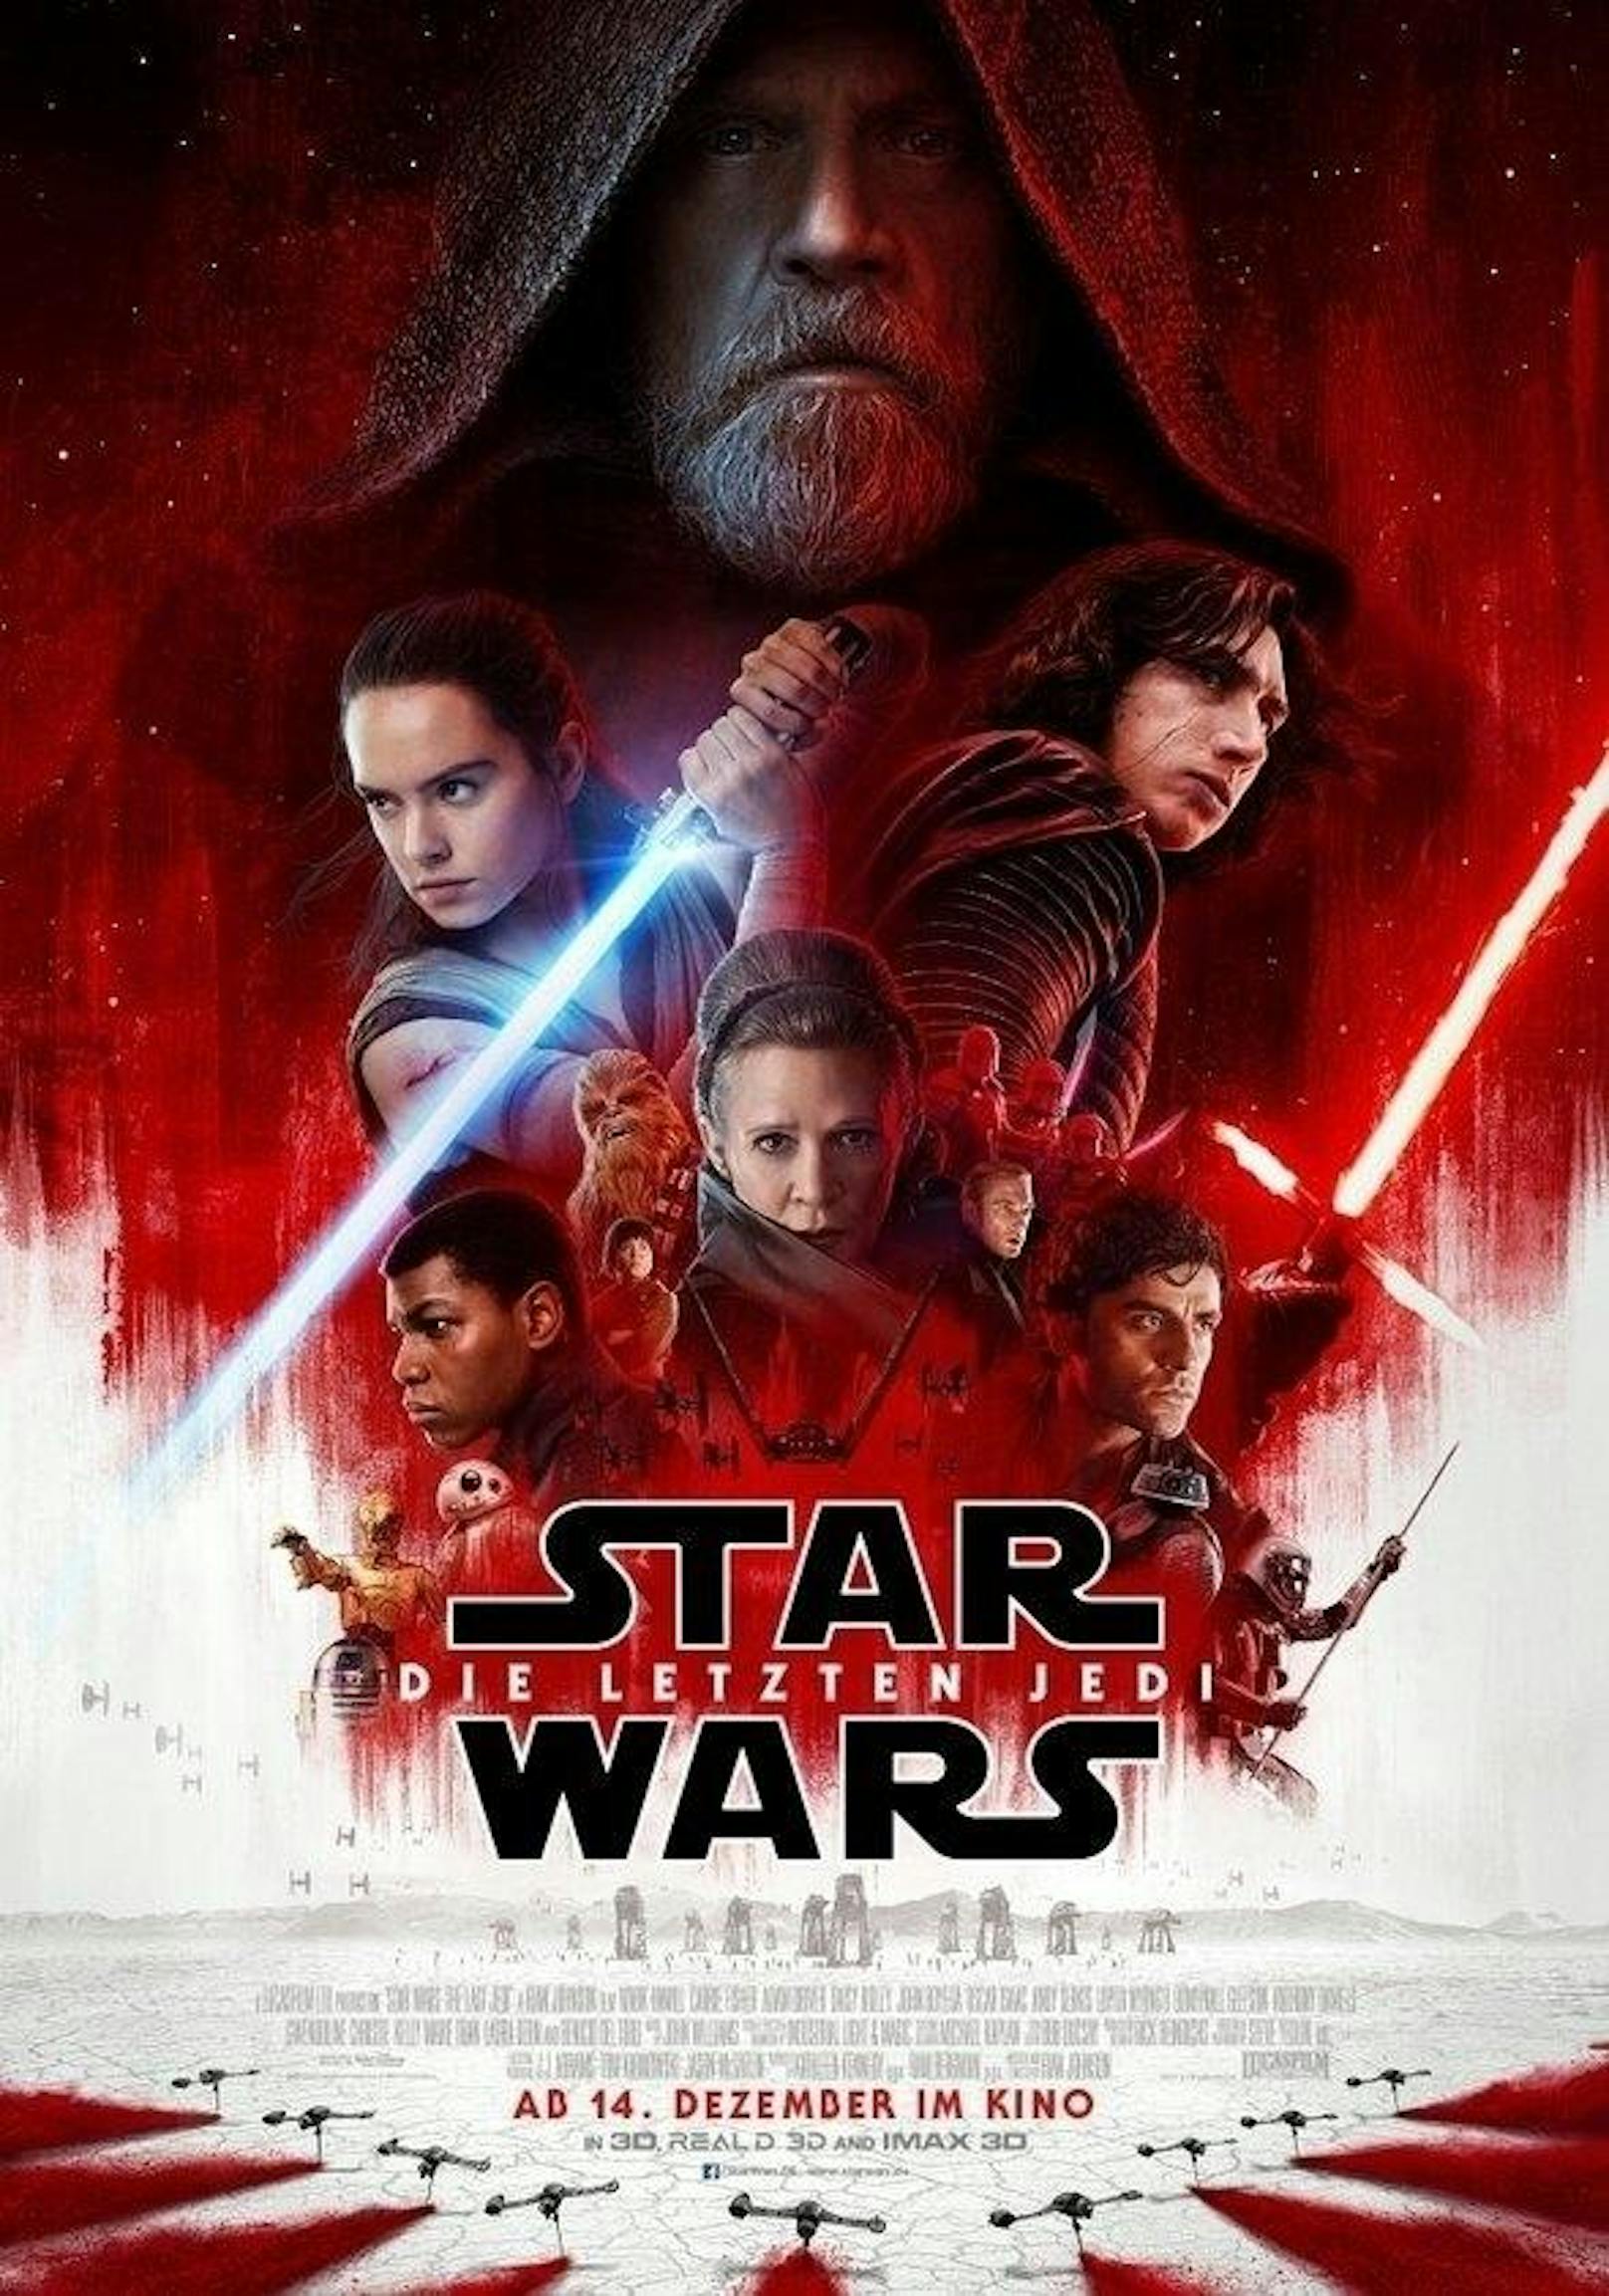 Episode VIII: "Star Wars: The last Jedi"